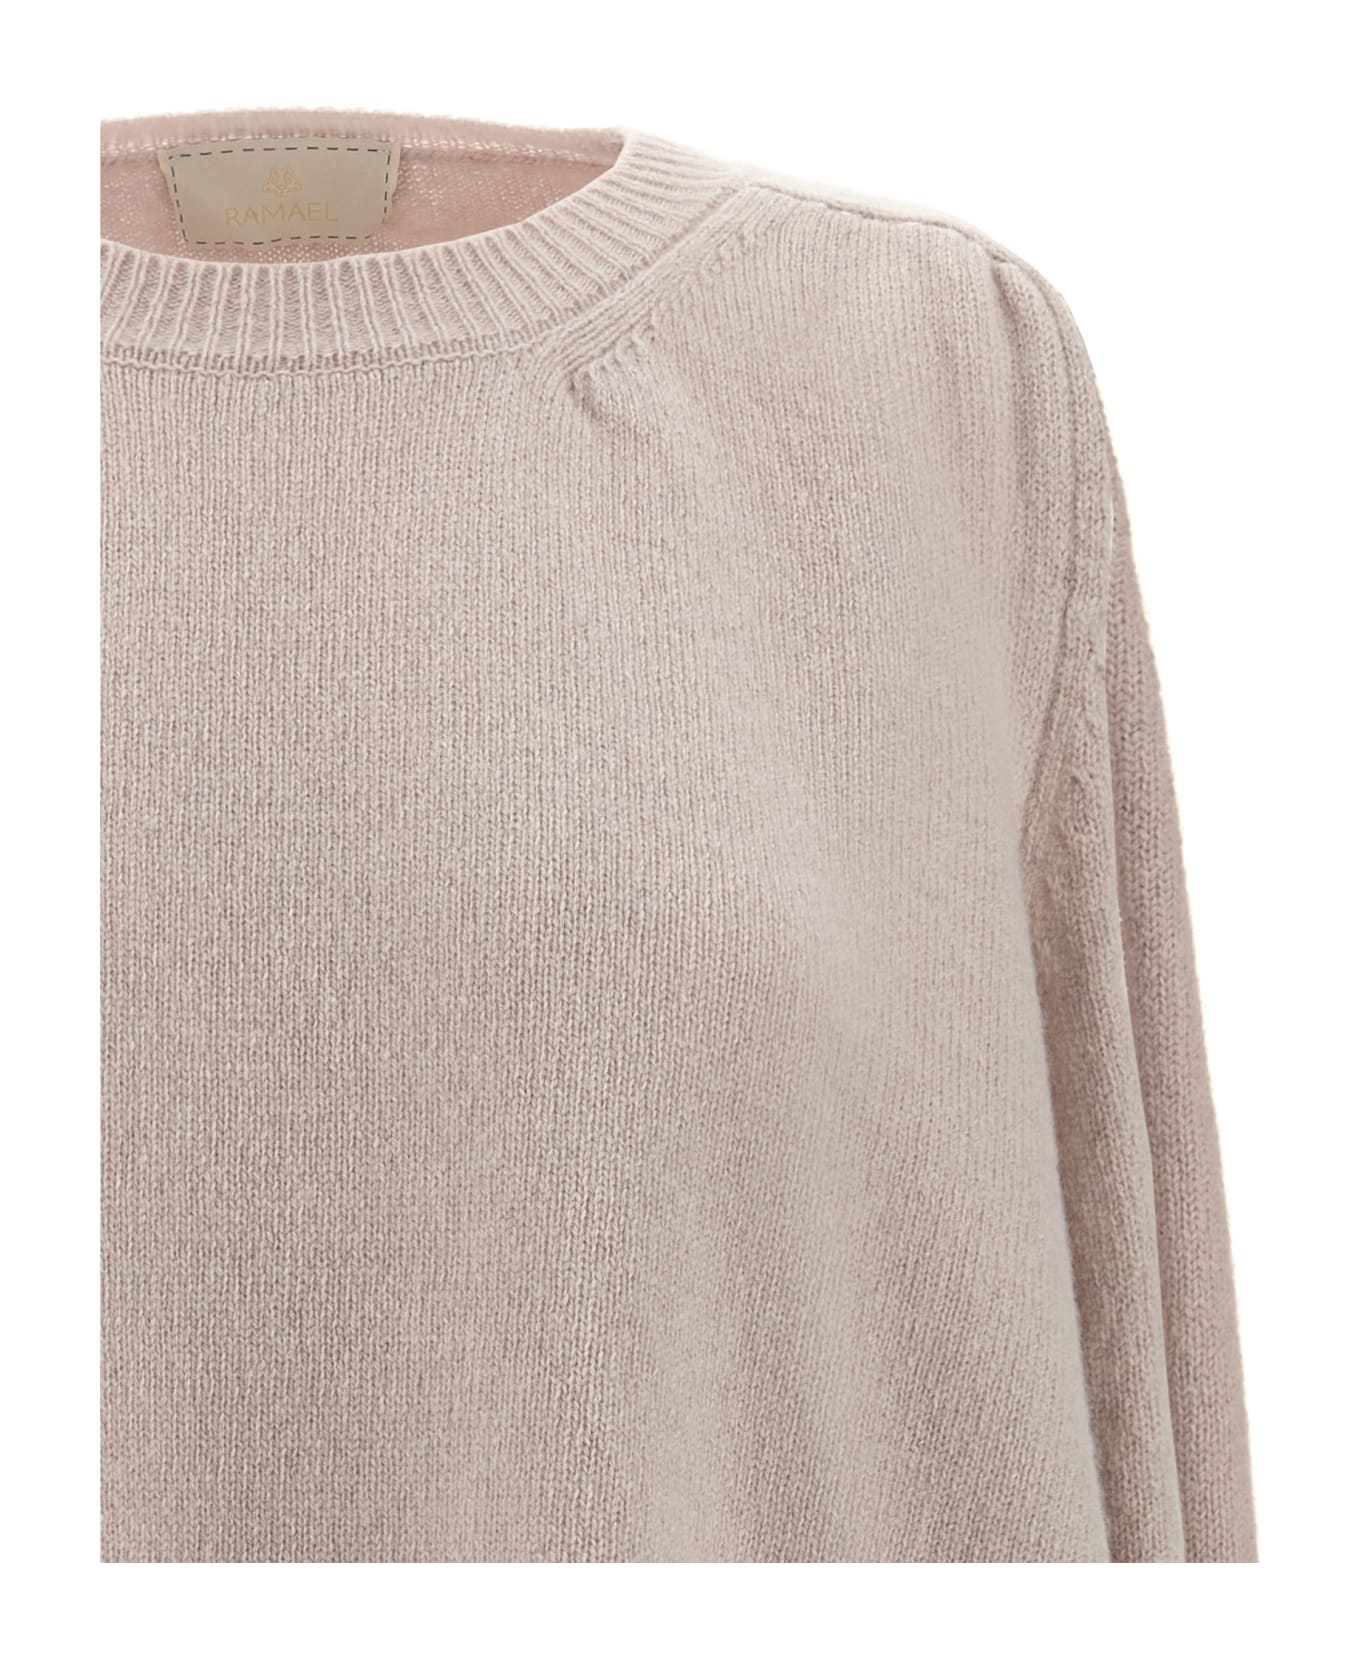 Ramael 'dorsal' Sweater - Gray ニットウェア